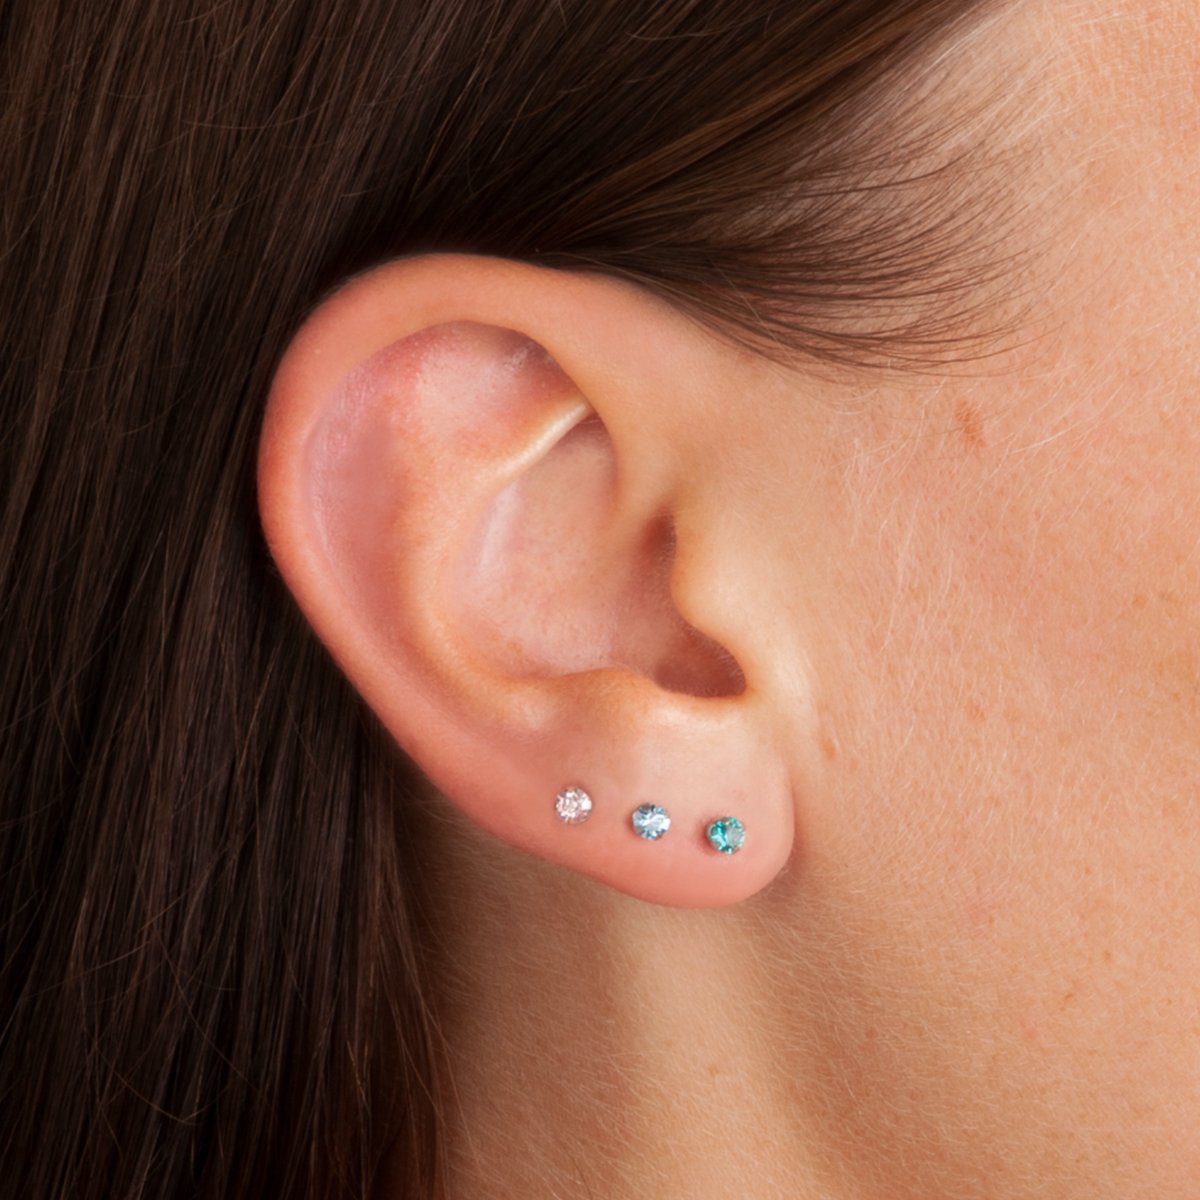 Lovisa ear peircings (see comments!!) : r/AustralianMakeup